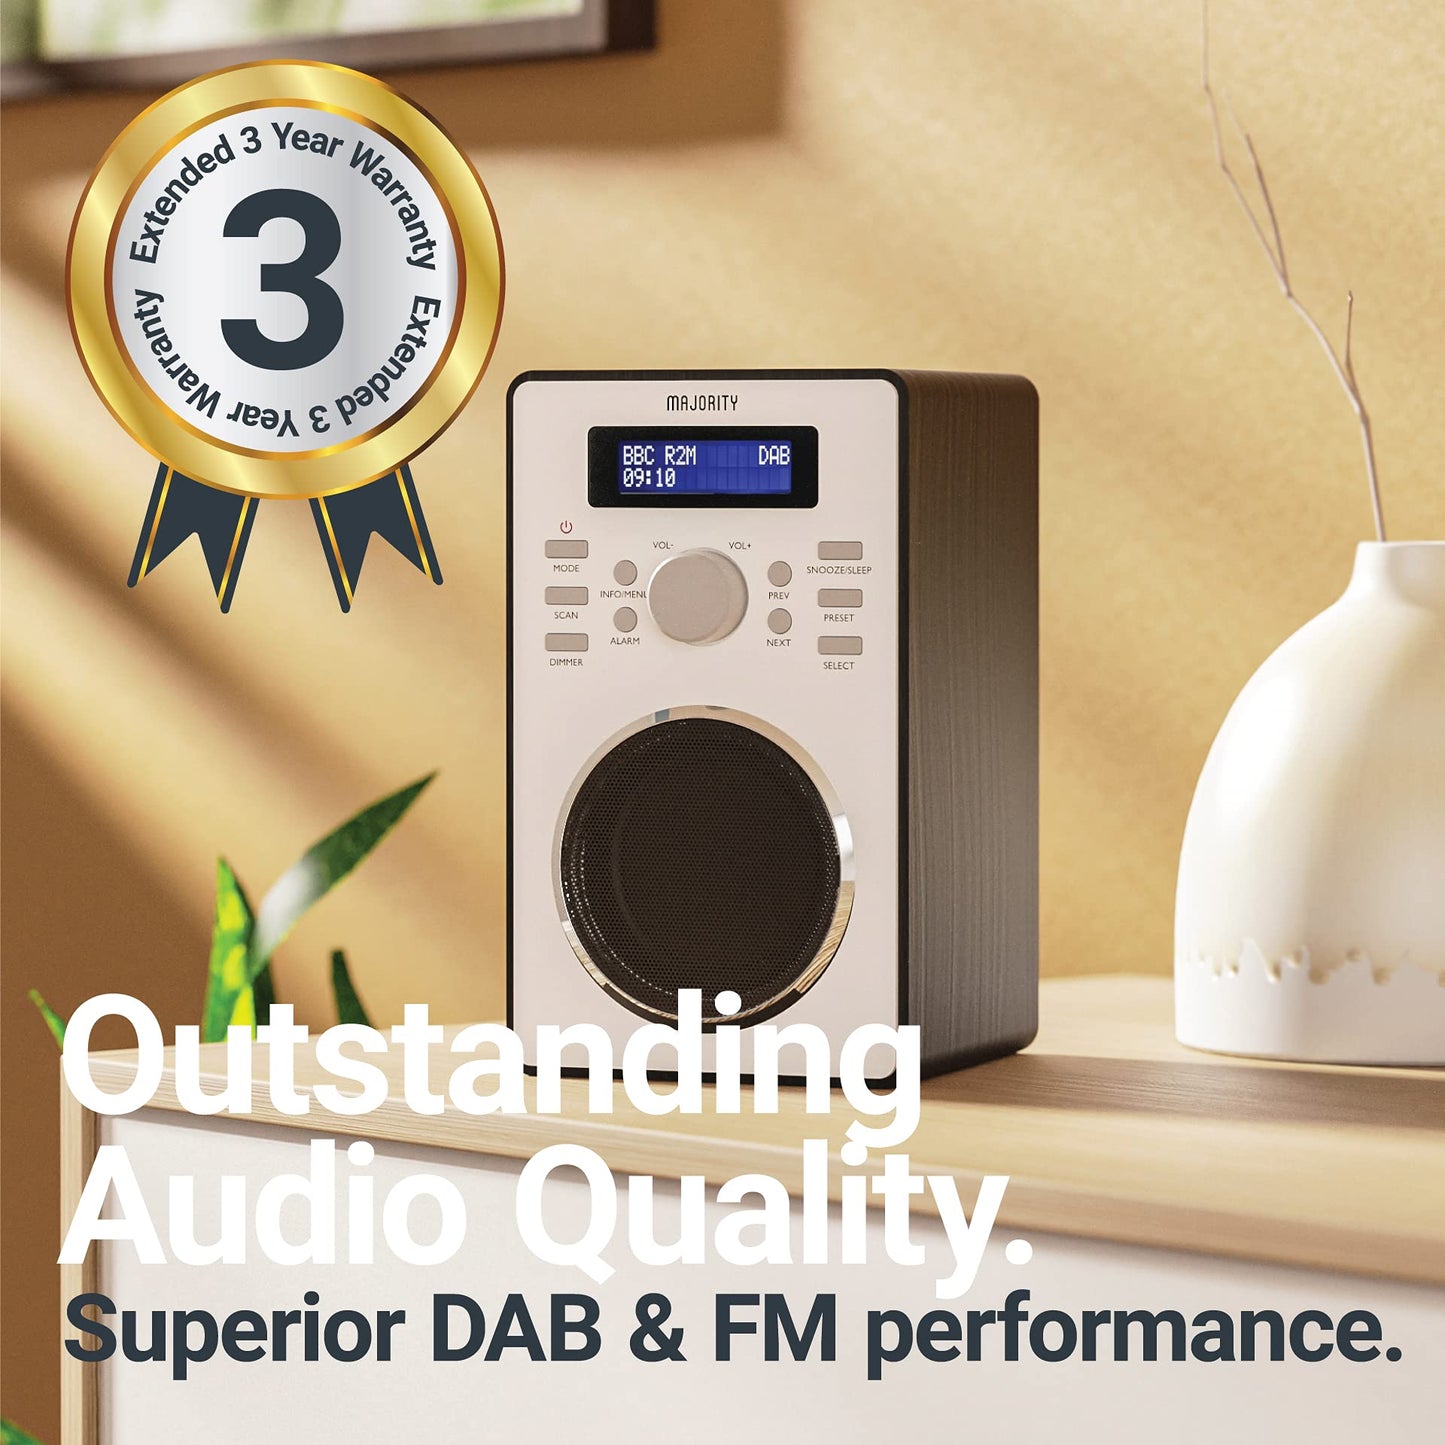 Majority Barton II DAB/DAB+/FM digital radio